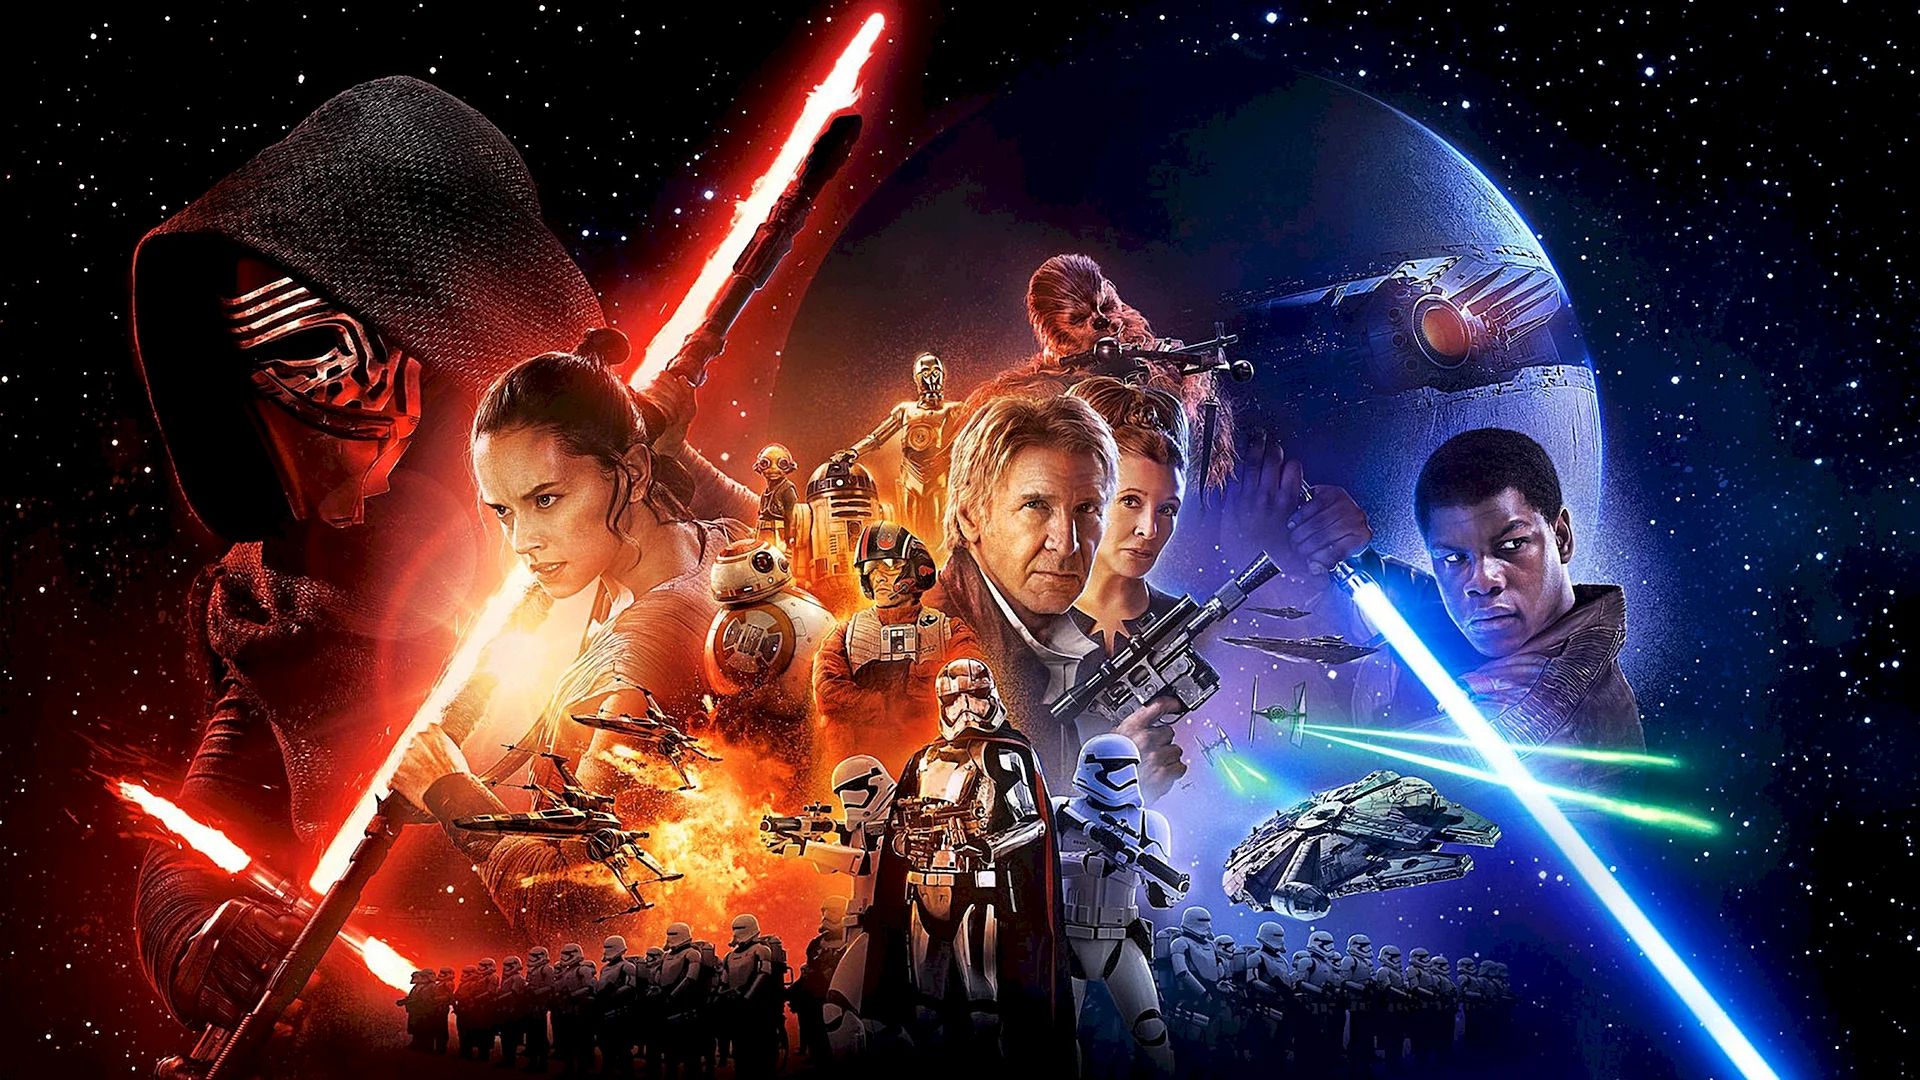 Star Wars Vii Wallpaper